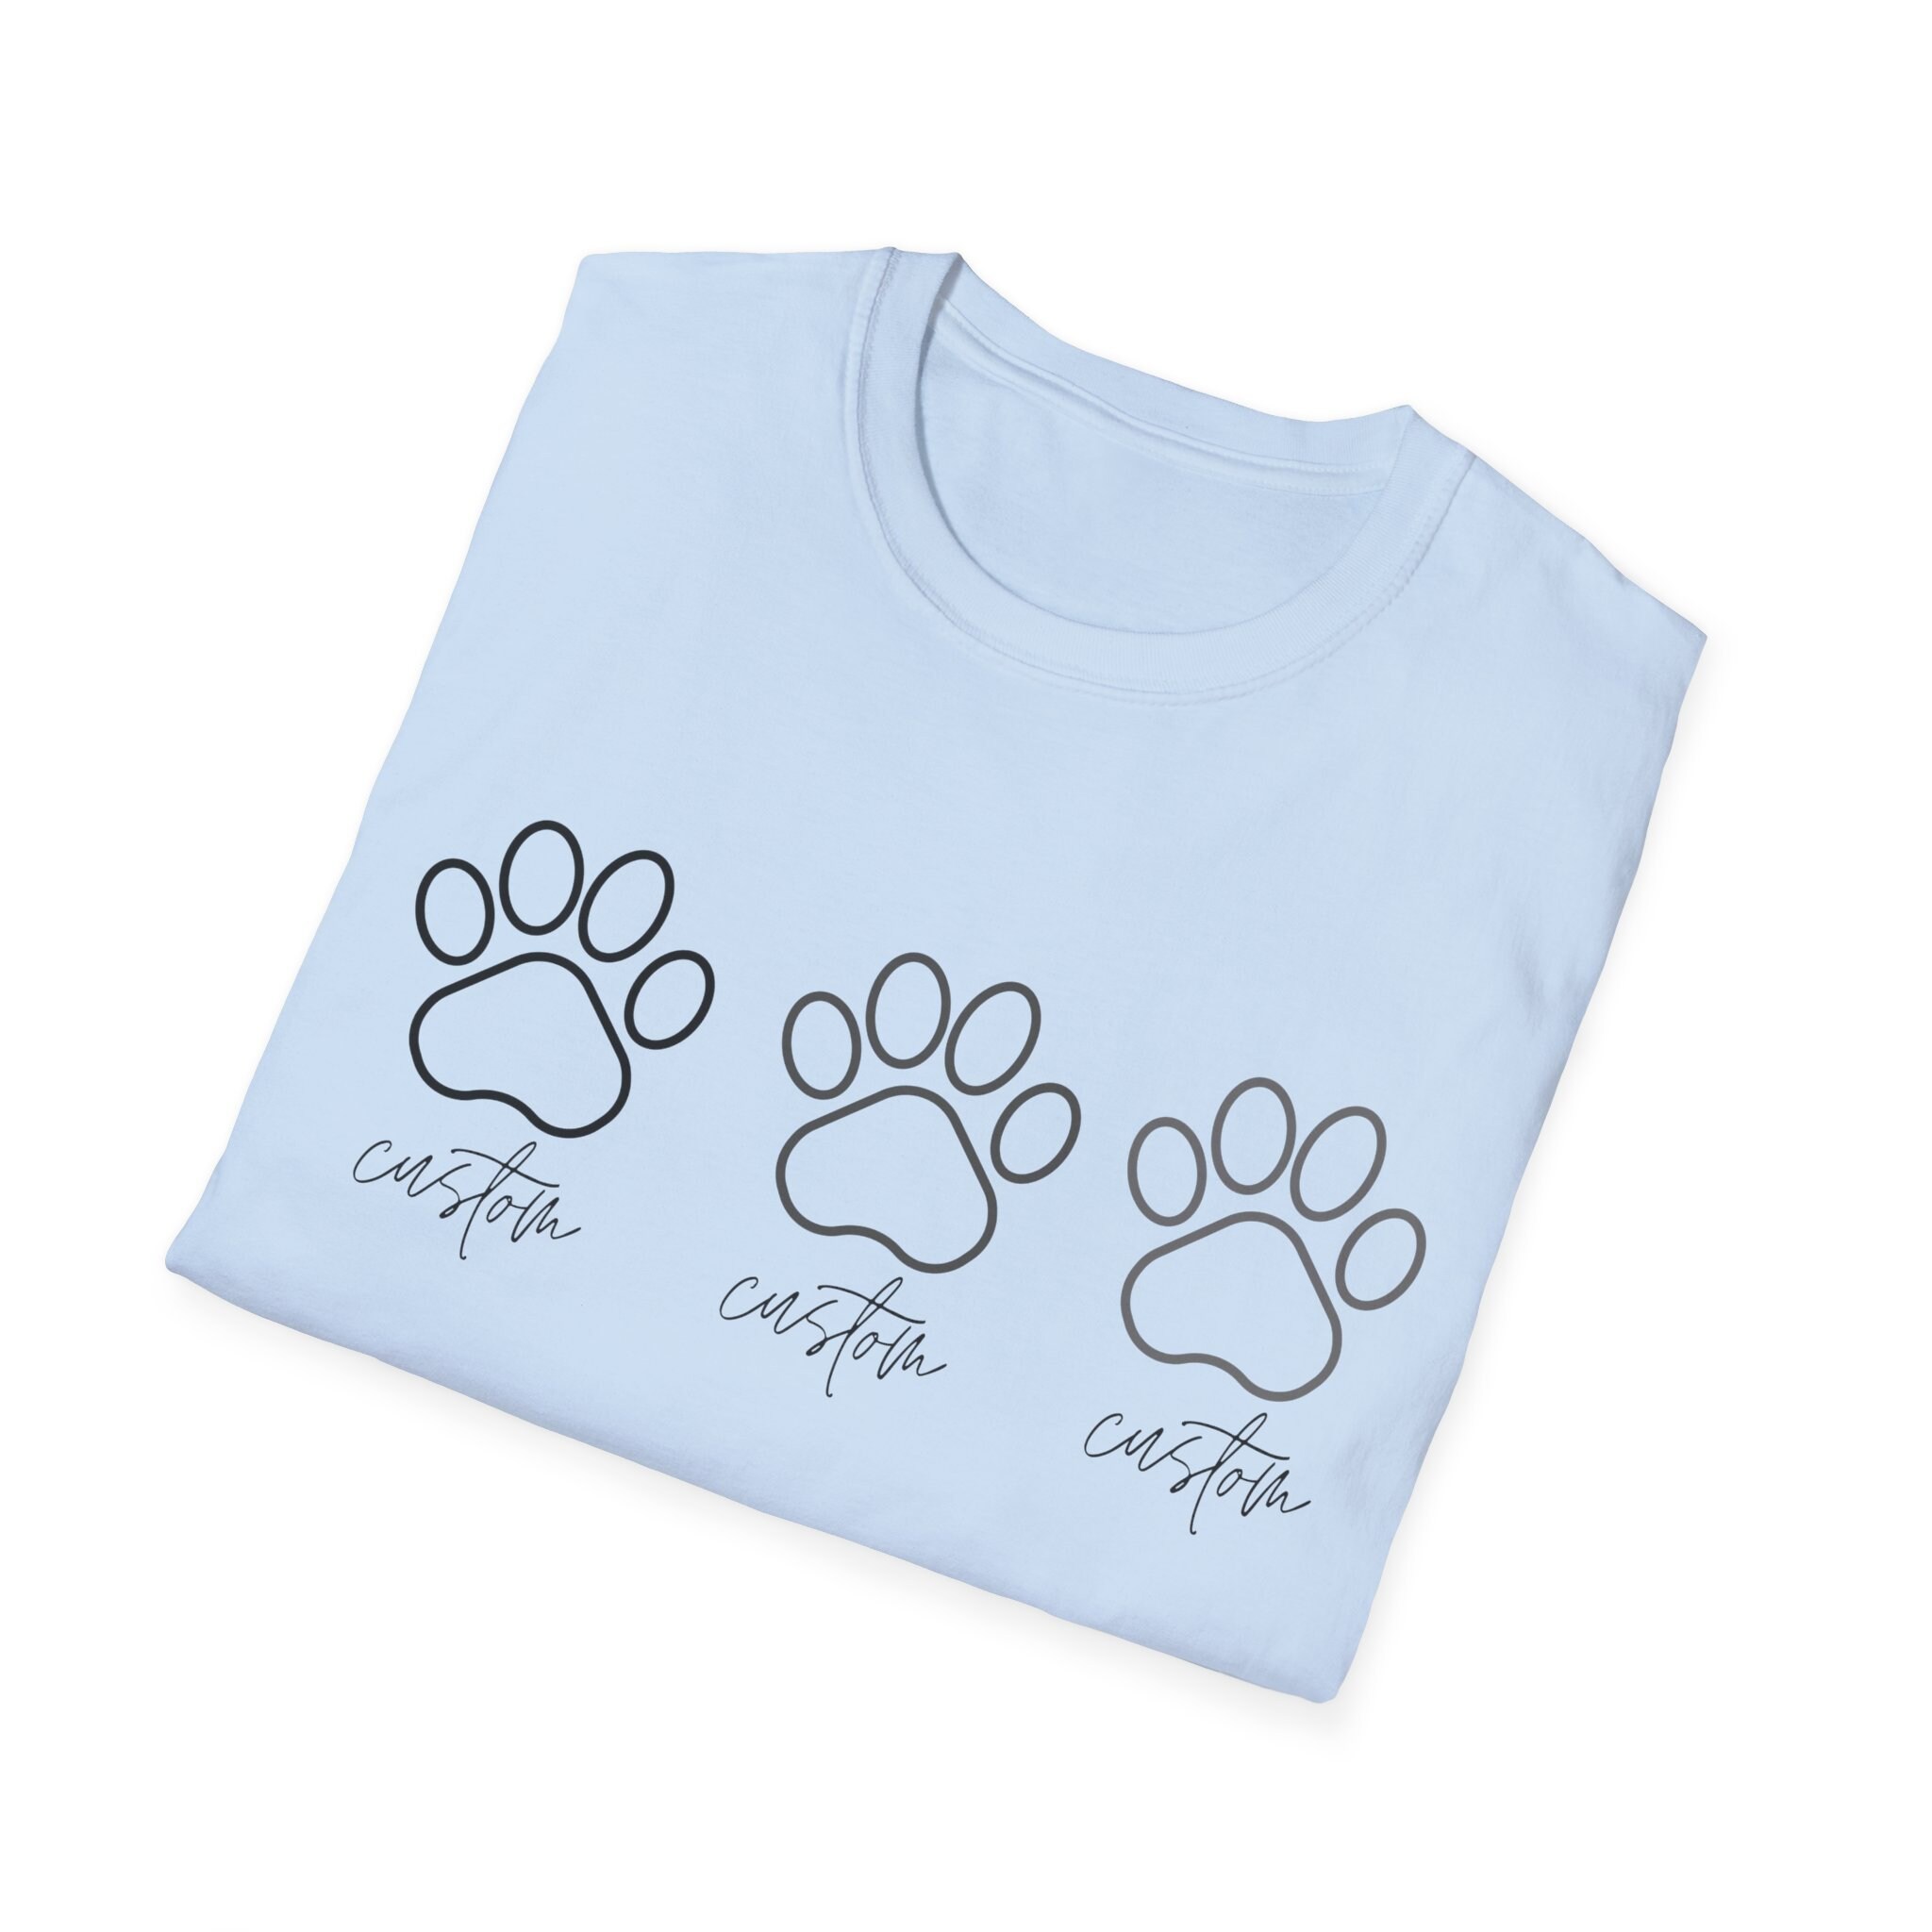 Custom Dog T-shirt, personalised dog T-shirt